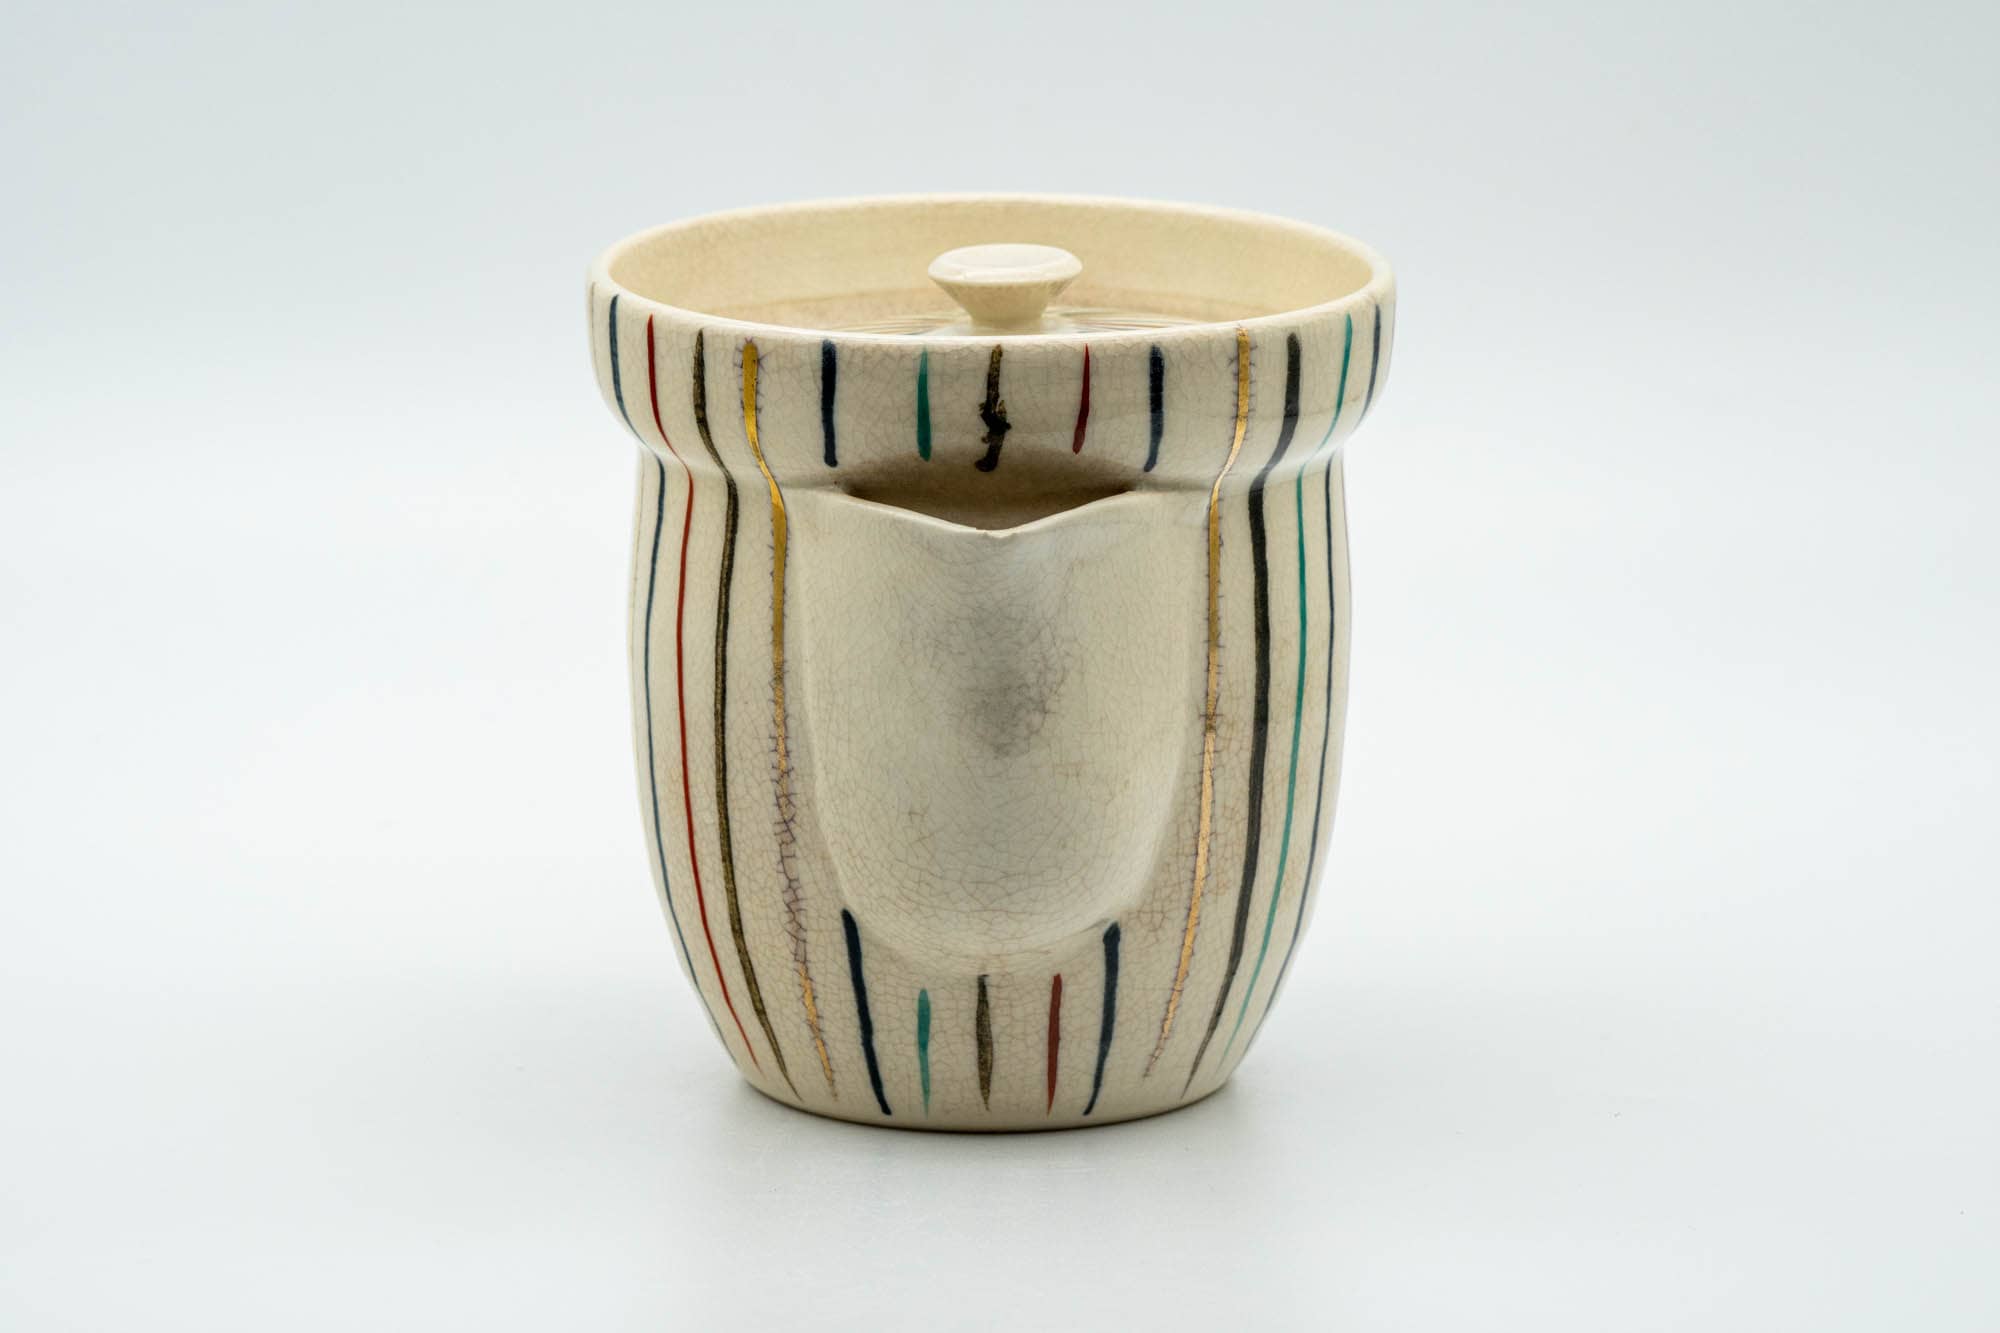 Japanese Houhin - Colorfully Striped Collared Do-ake Teapot - 250ml - Tezumi